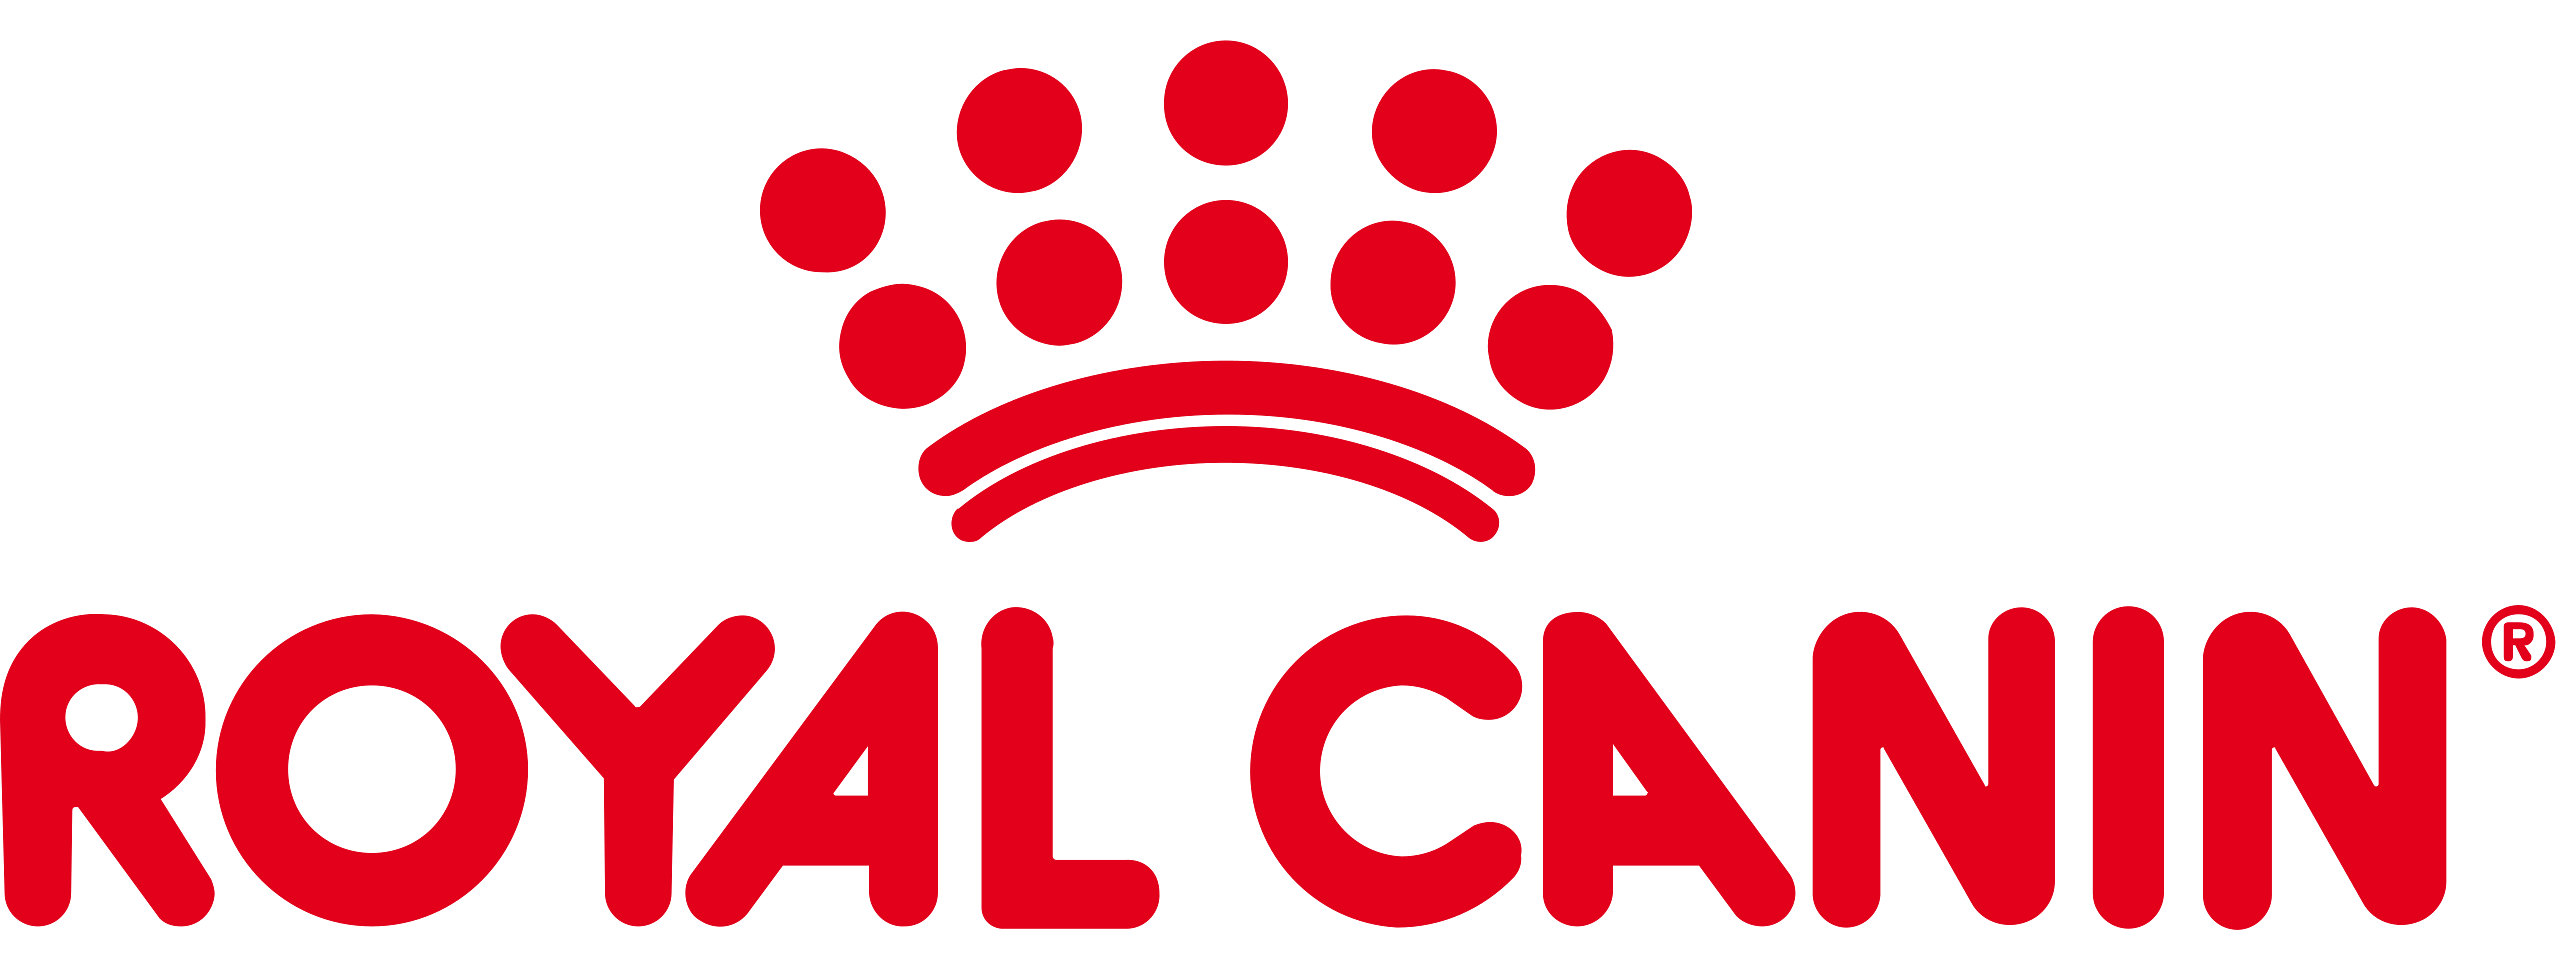 Royal Canin Logo svg